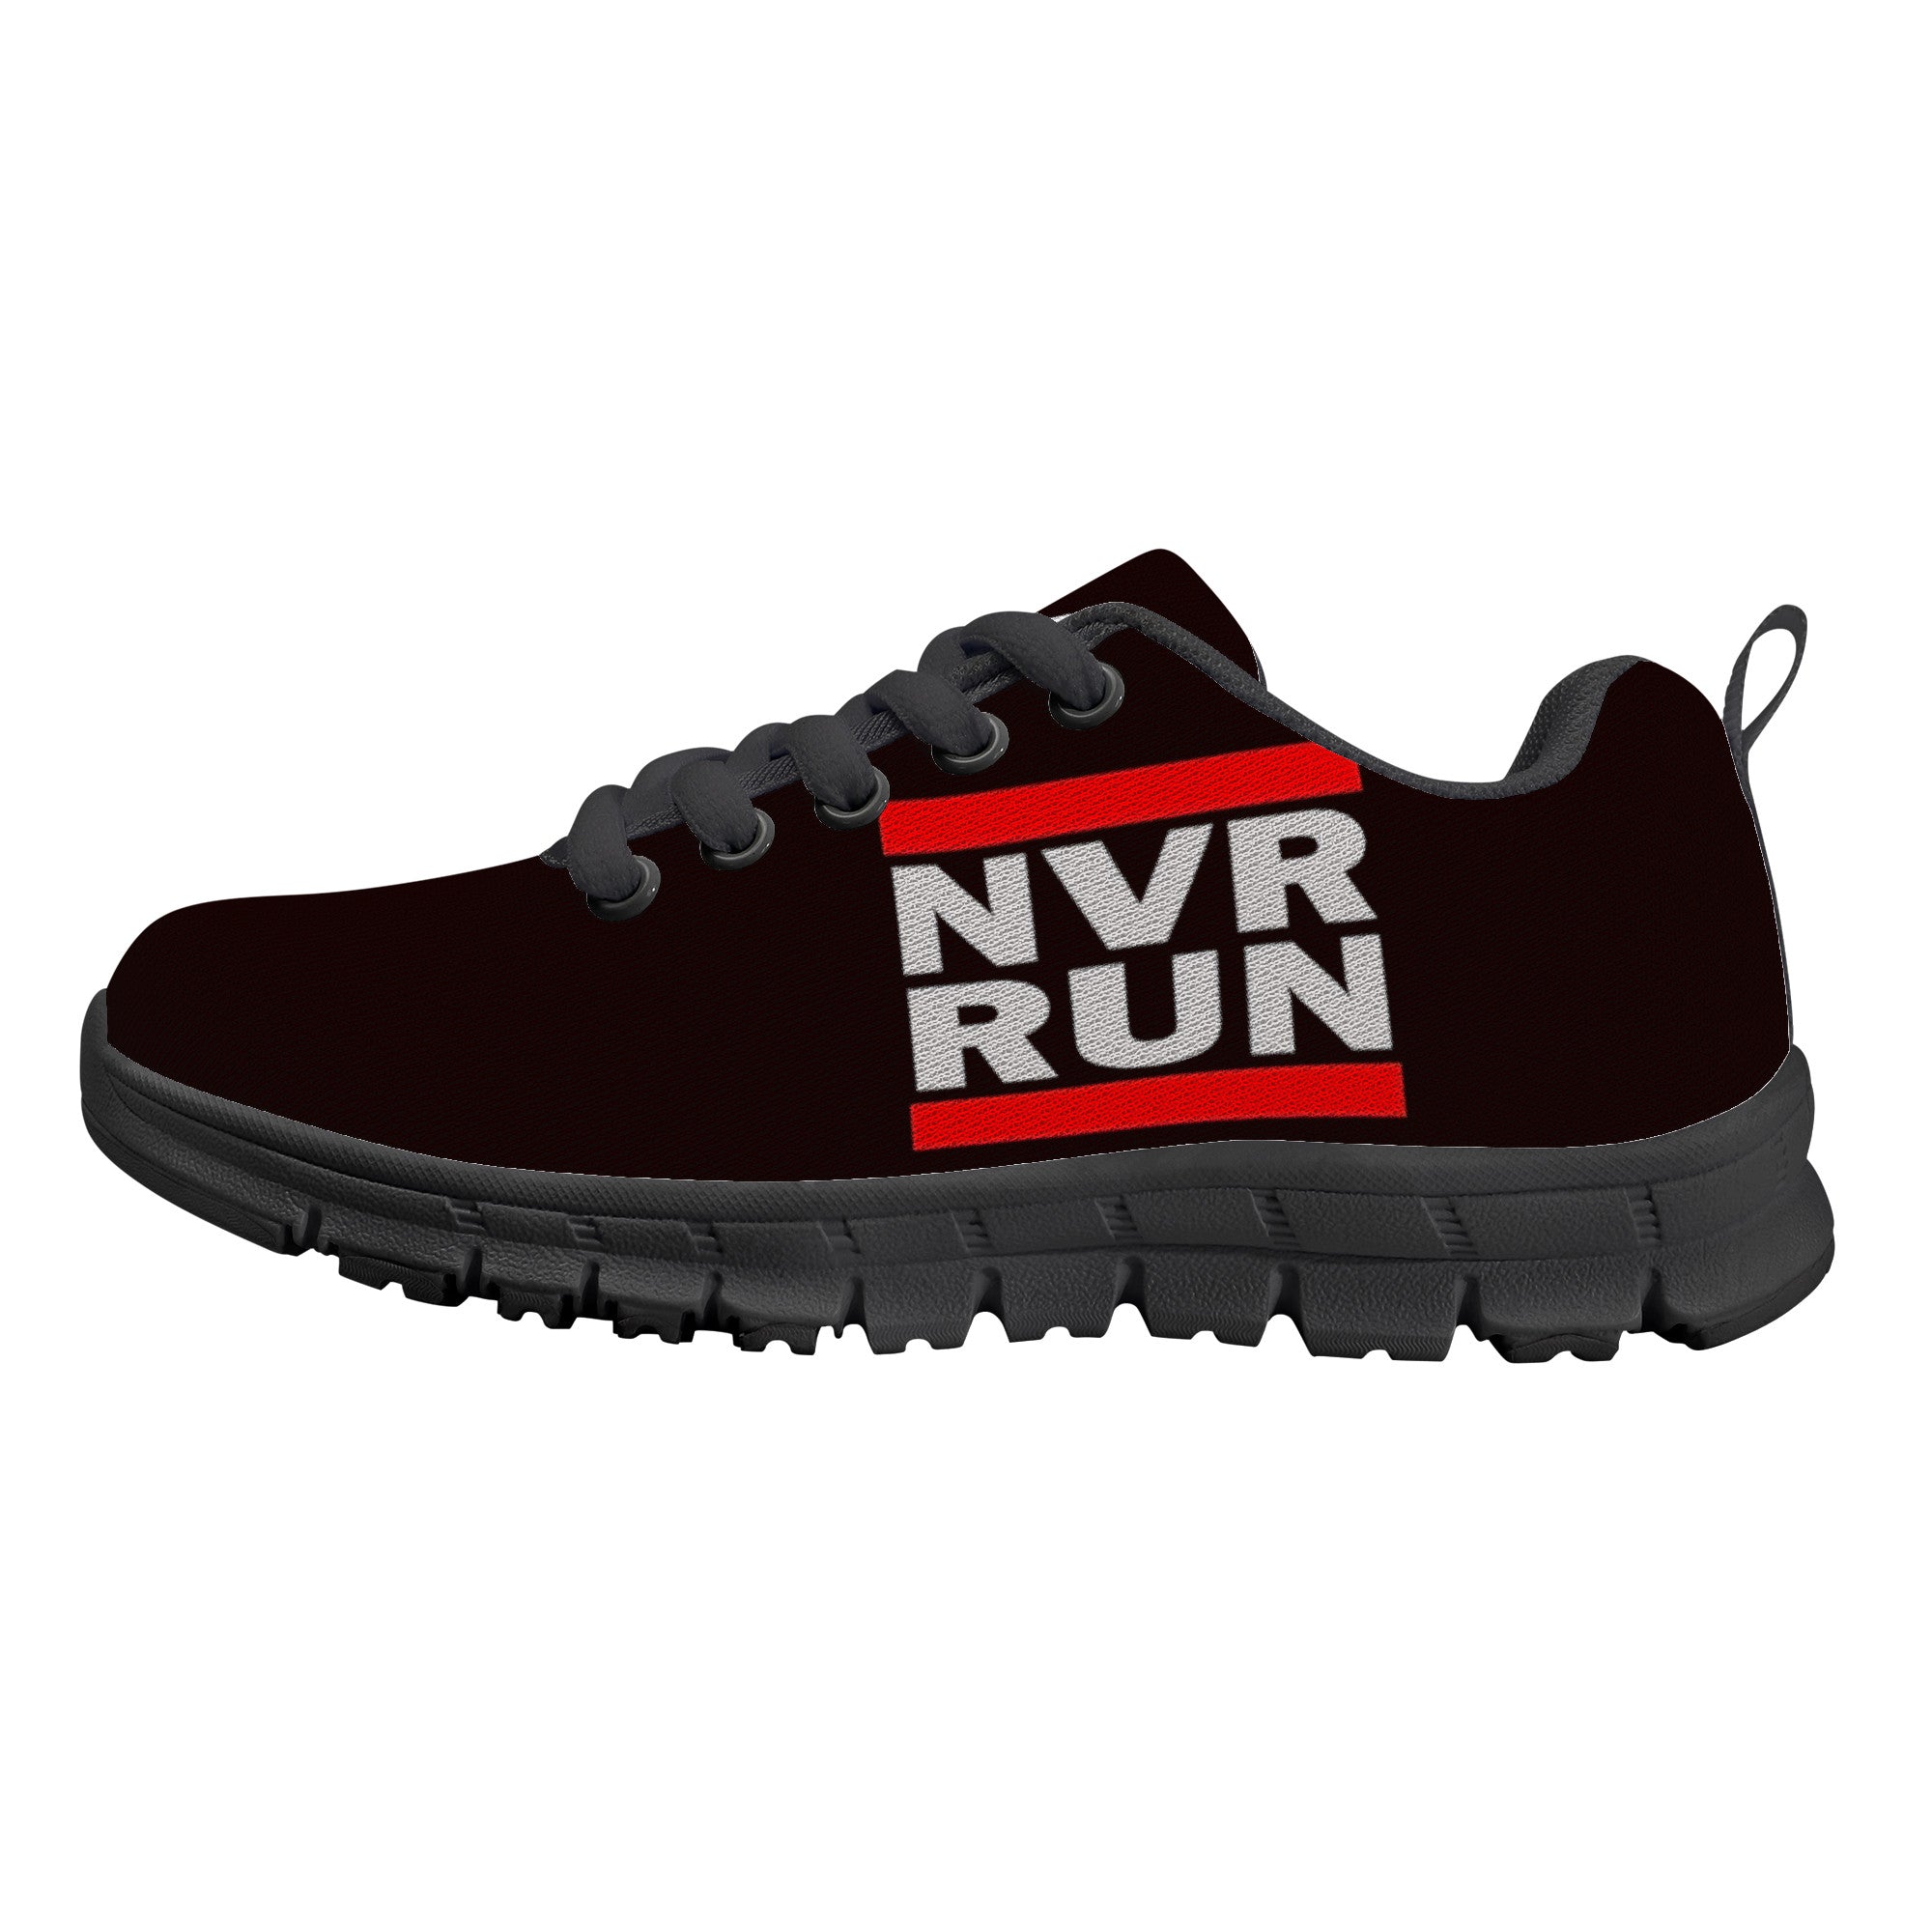 NVR RUN - Kids Sneakers - Black - Shoe Zero